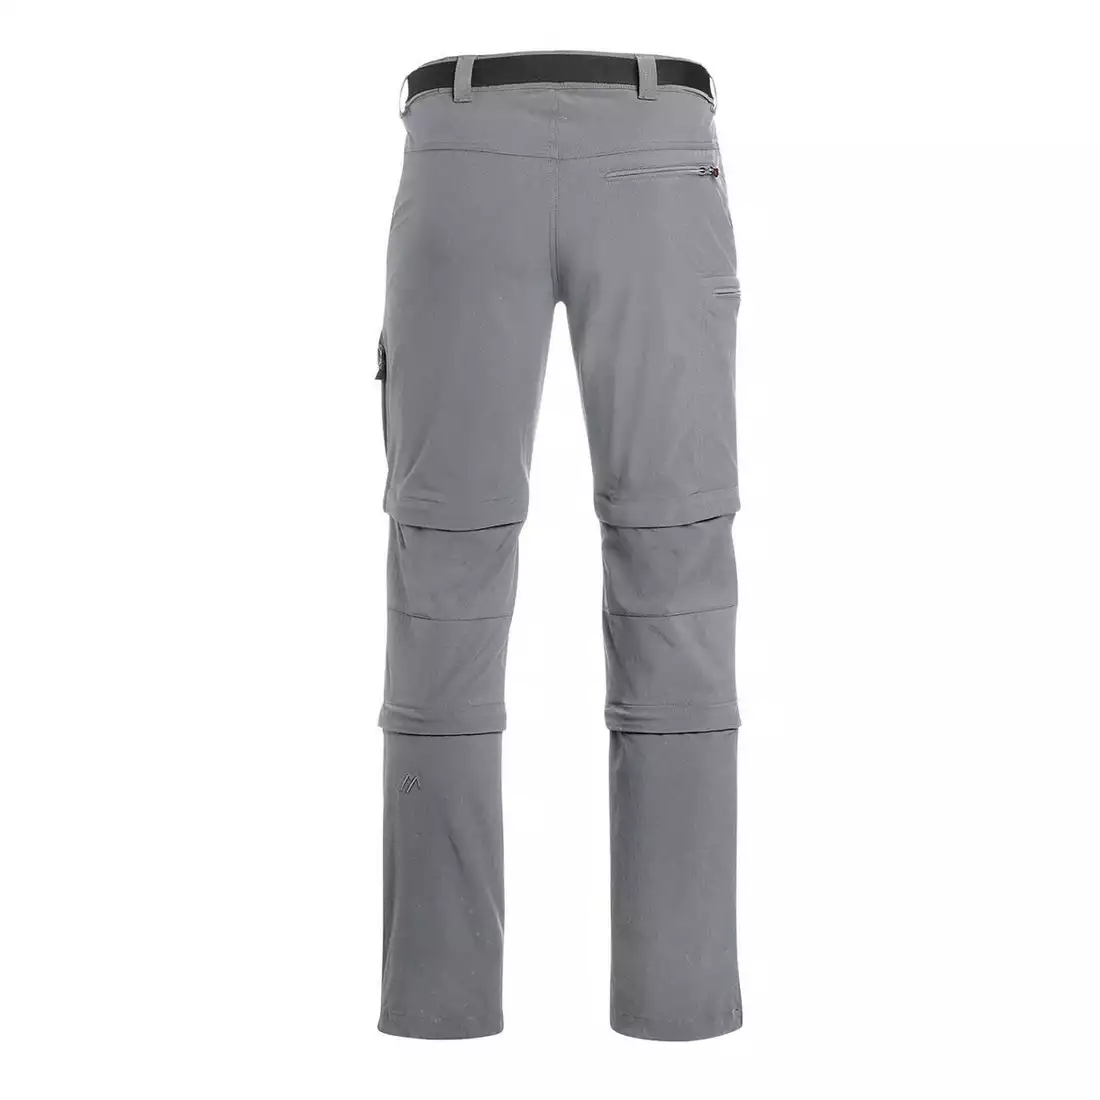 MAIER MAIERRINUS Men's hiking pants, gray